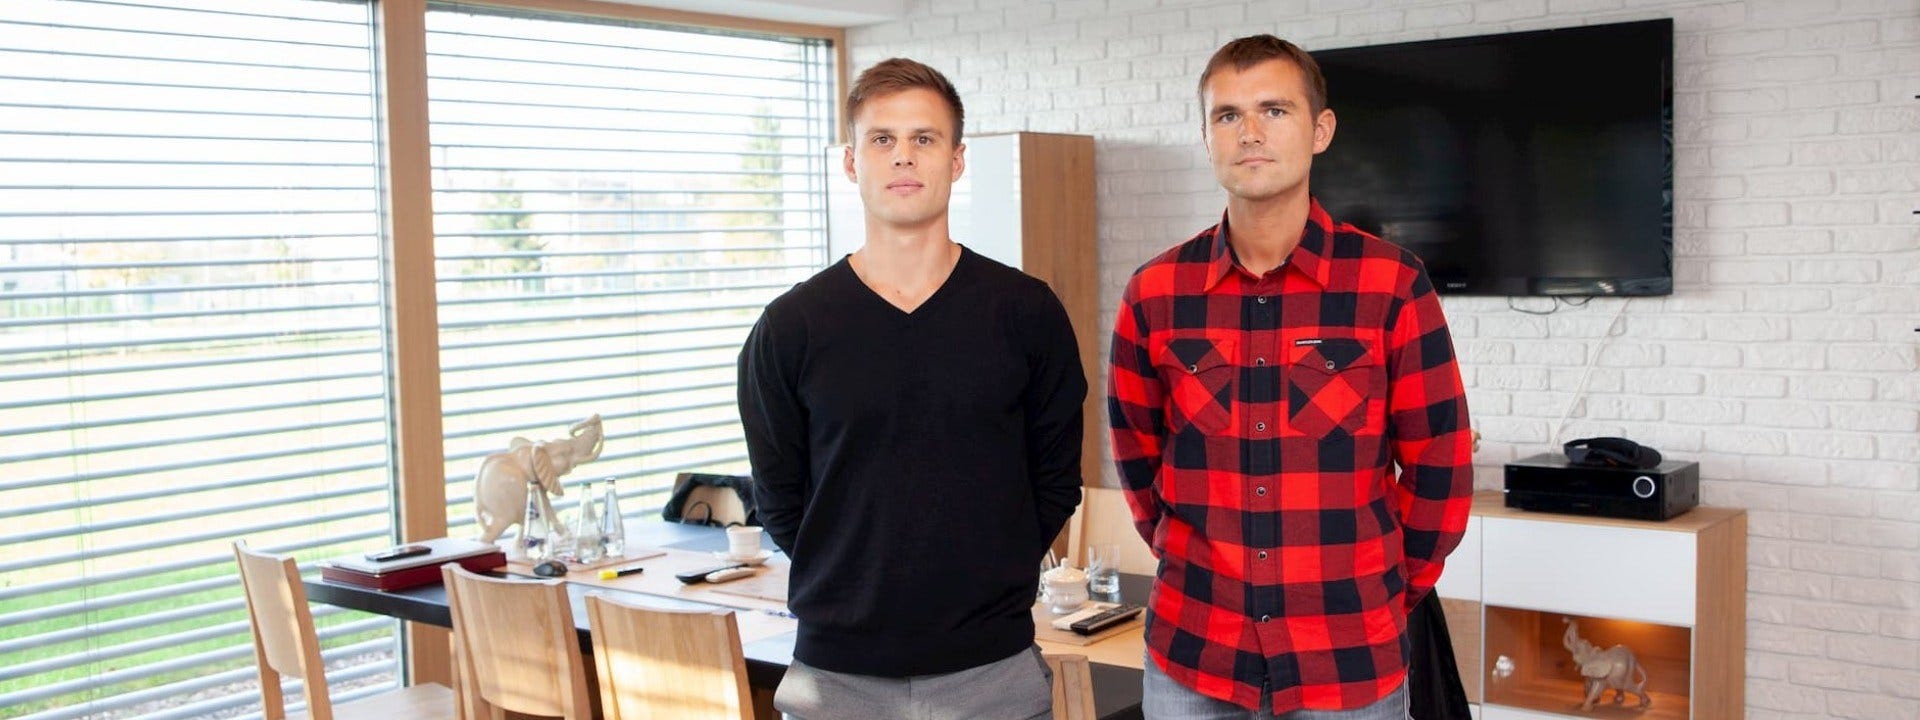 Kacper & Mateusz Ziemiński - co-owners of FAGUS company